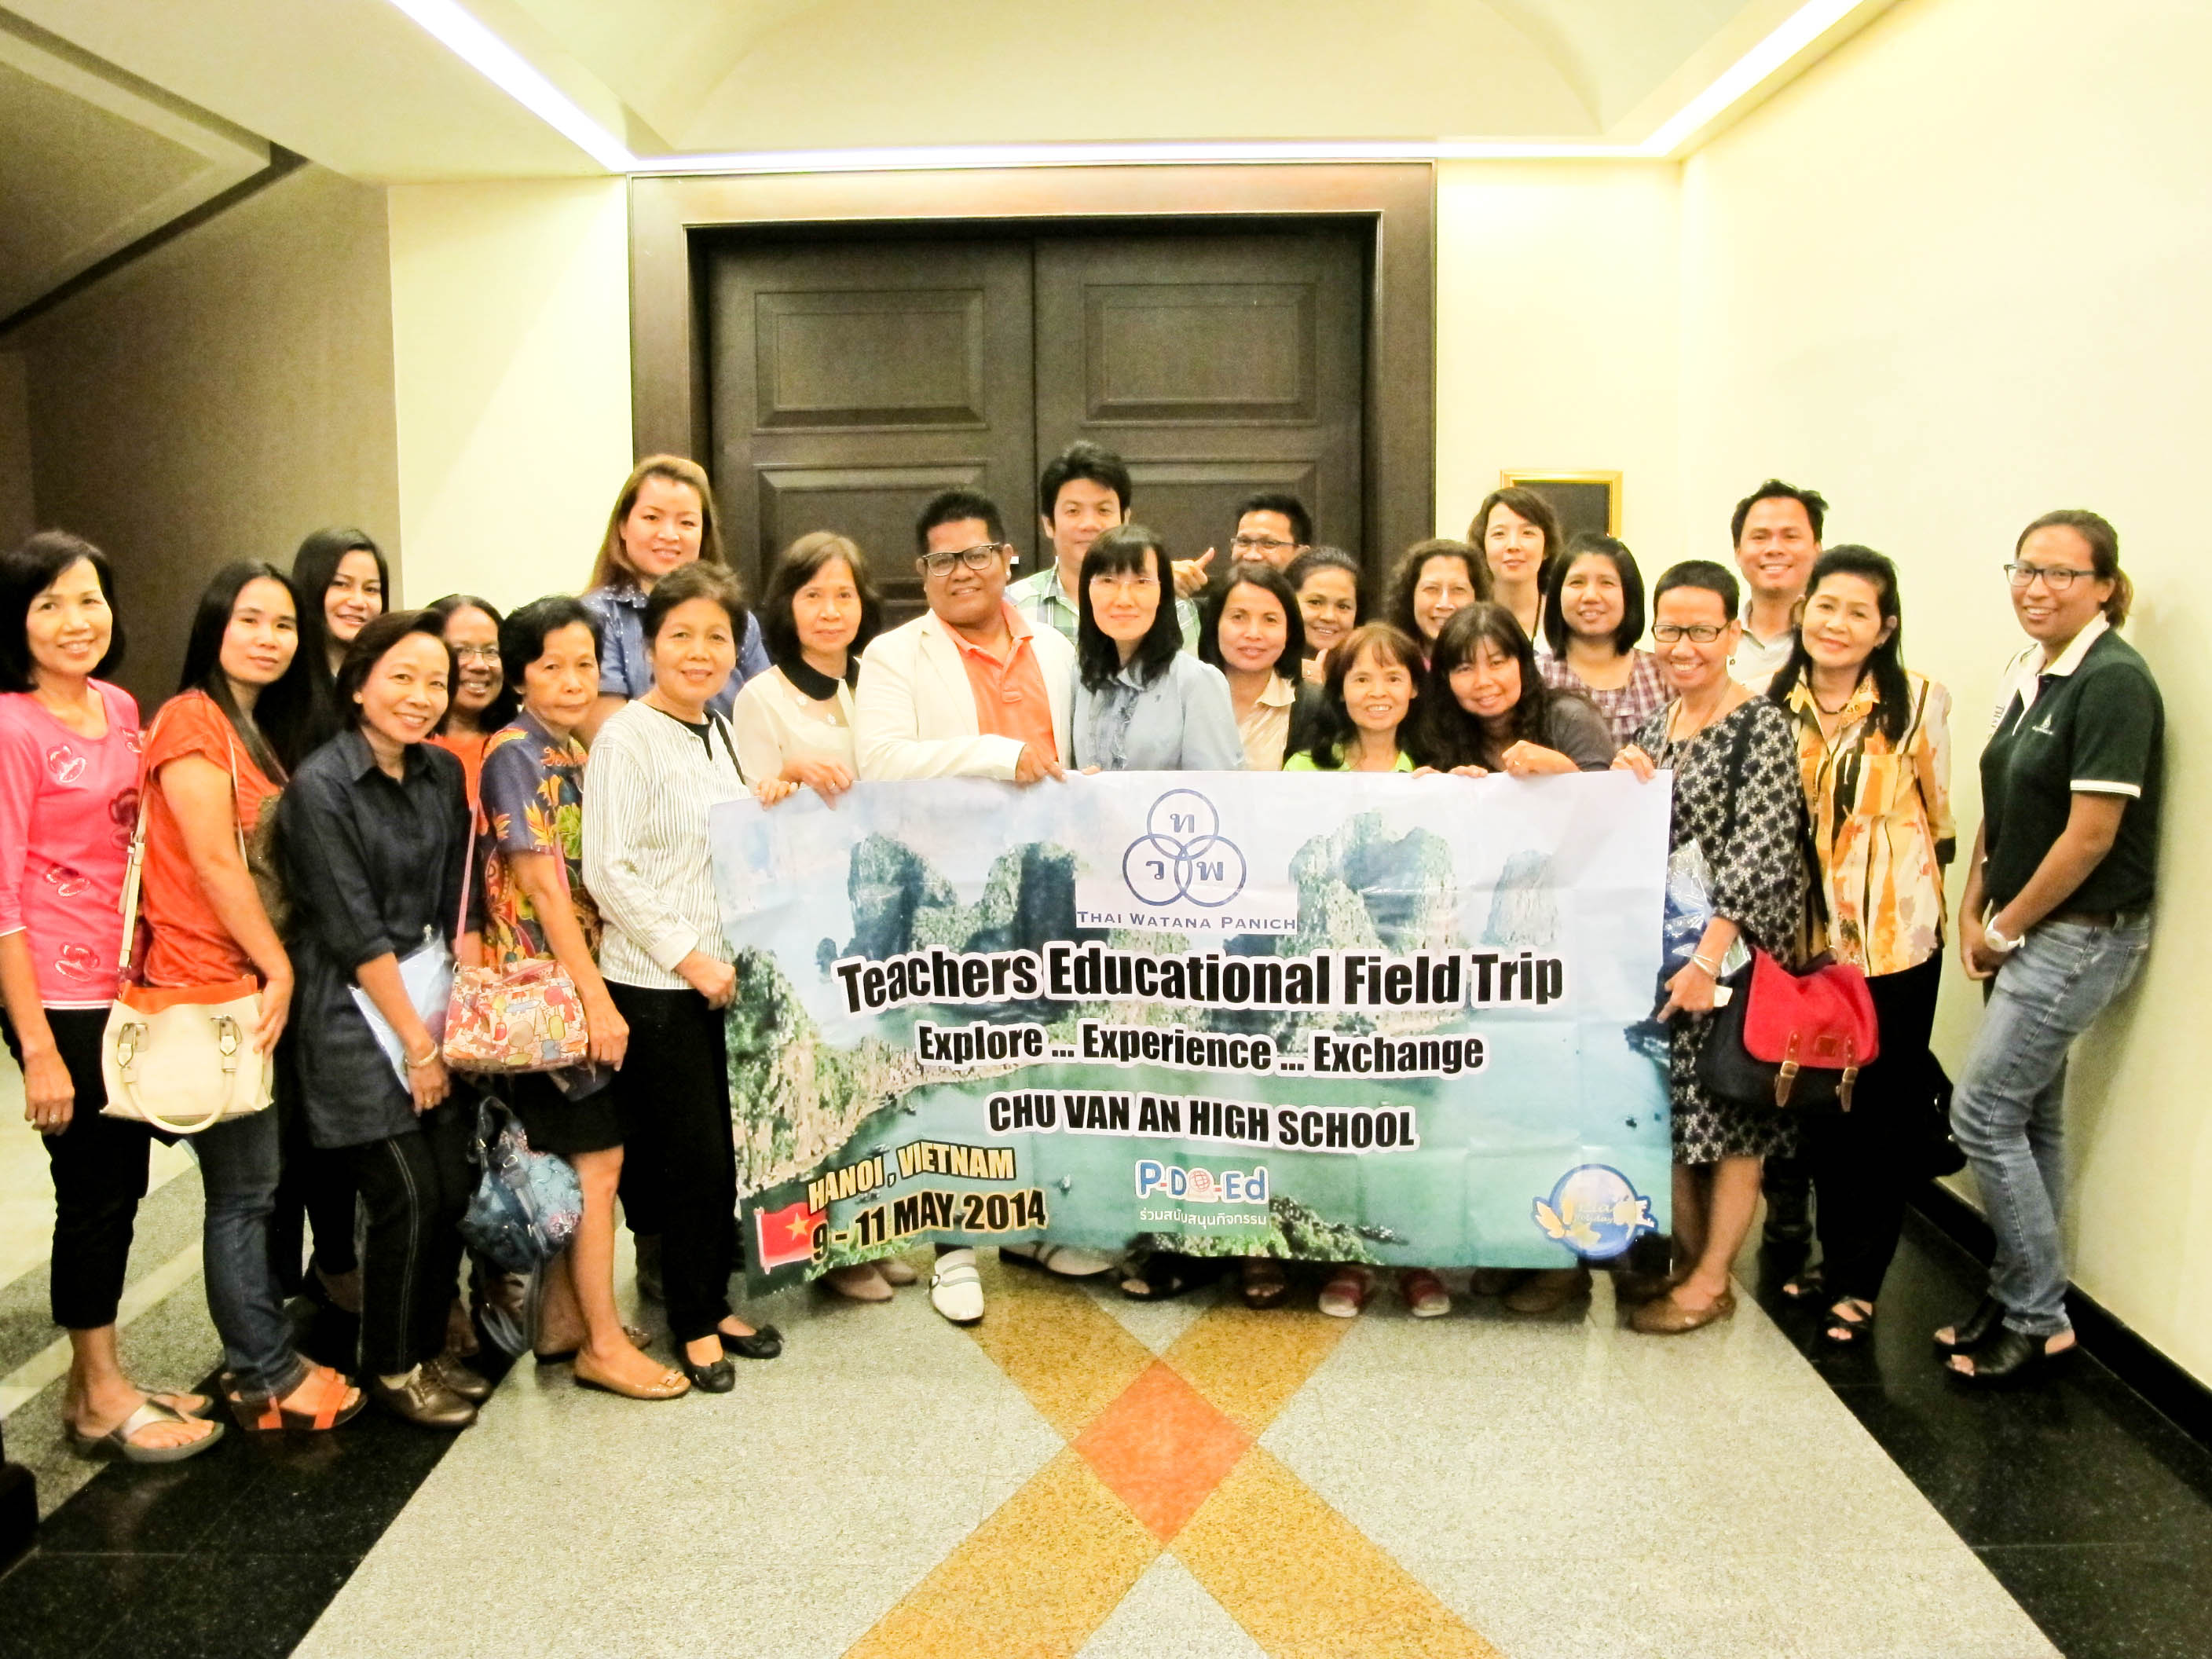 Thai Watana Panich Teachers Education Field Trip” ครั้งที่ 2  At Hanoi, Vietnam